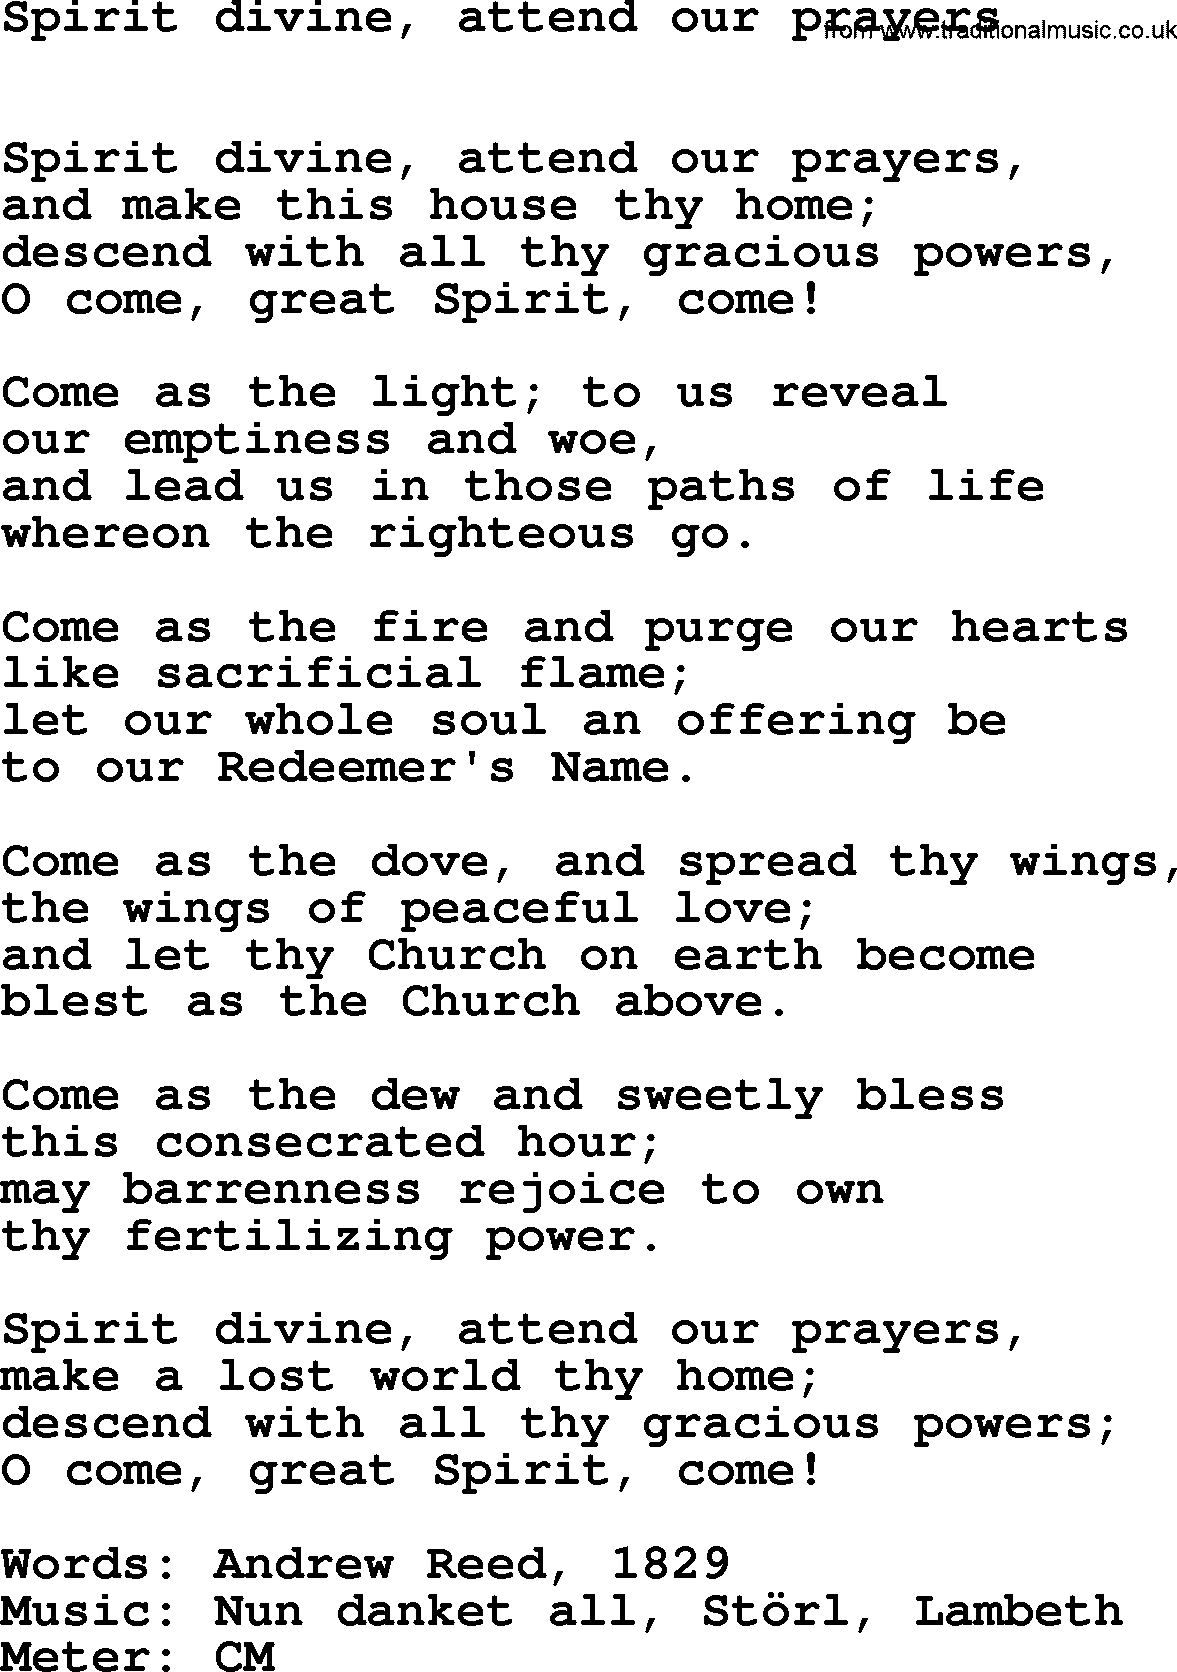 Book of Common Praise Hymn: Spirit Divine, Attend Our Prayers.txt lyrics with midi music